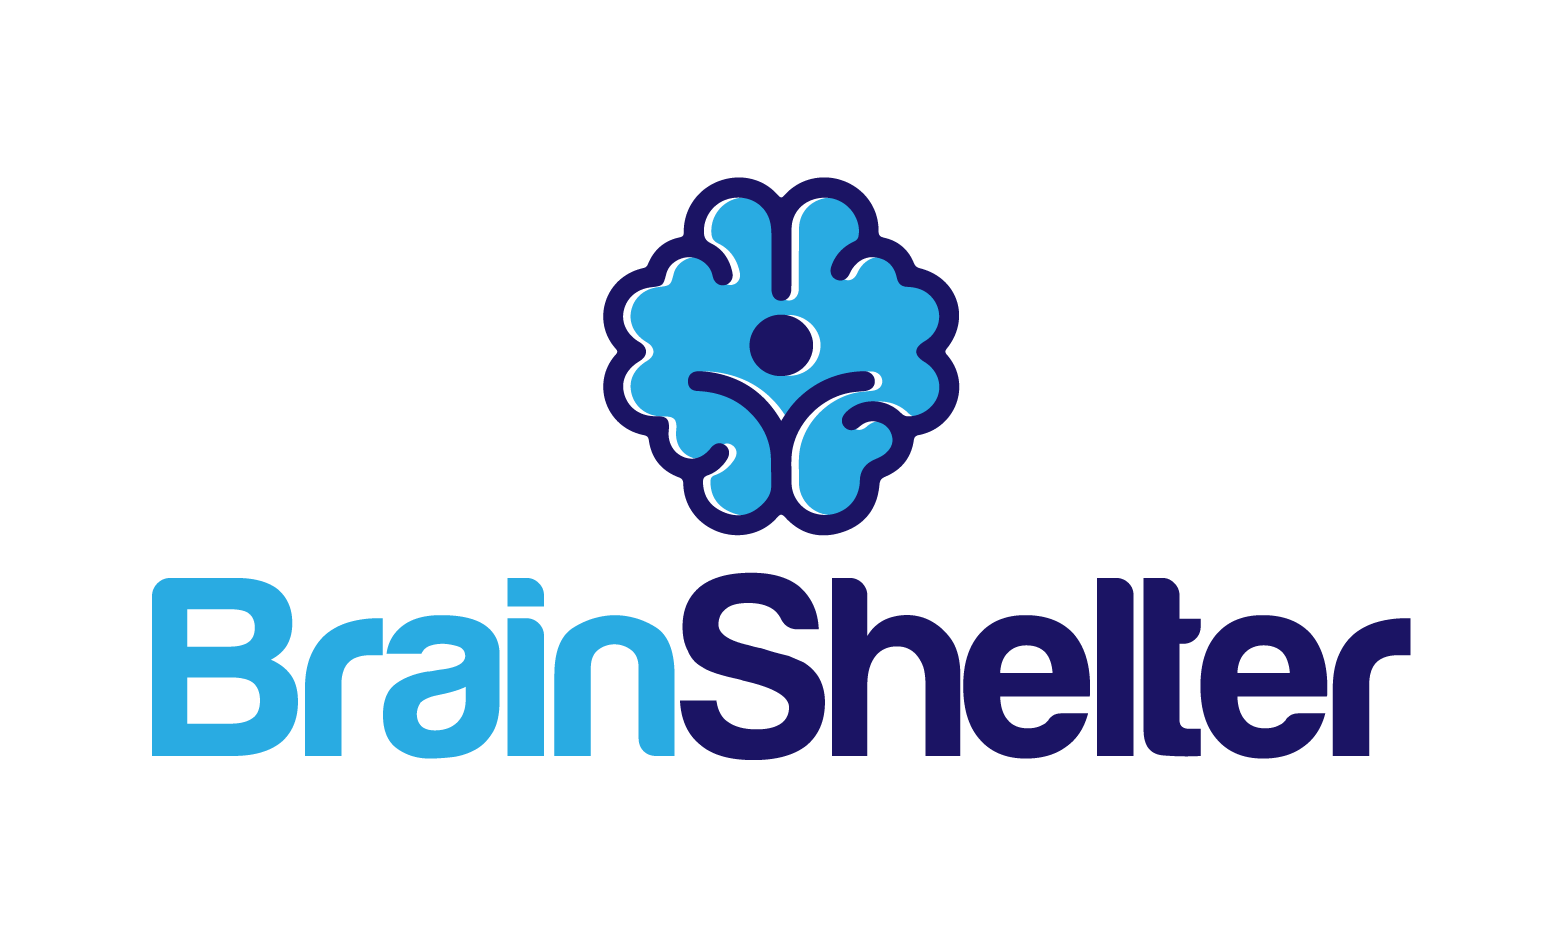 BrainShelter.com - Creative brandable domain for sale